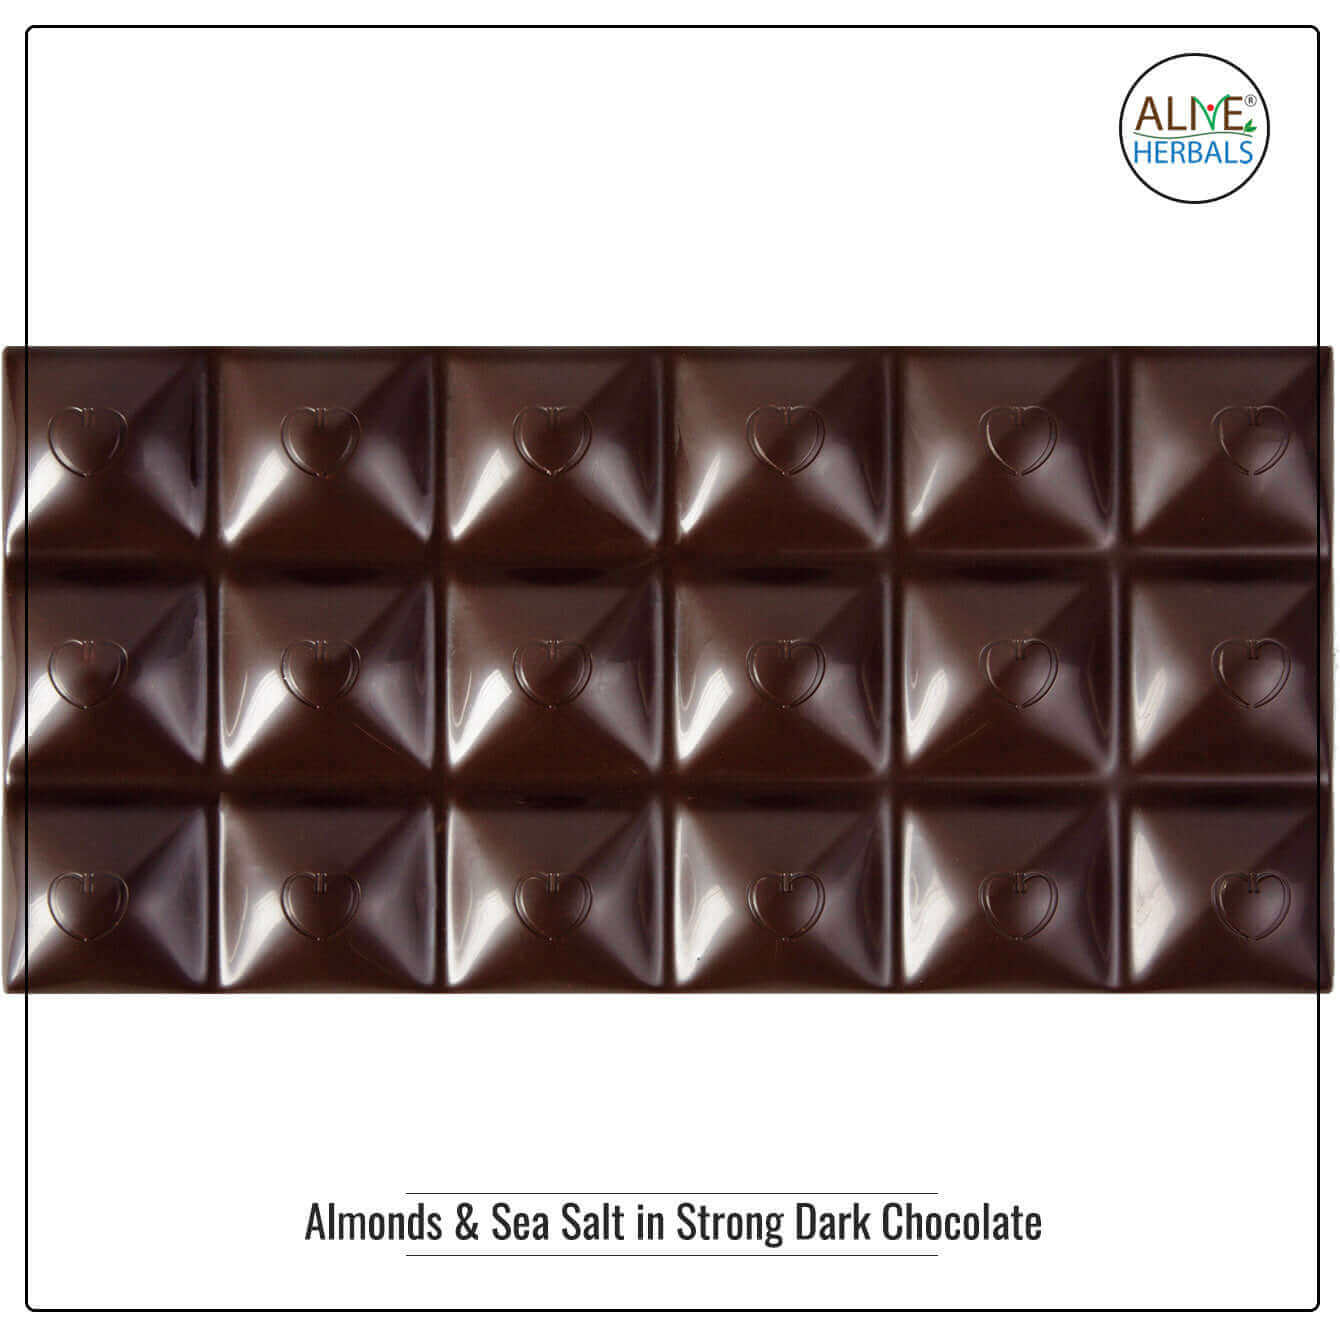 Almonds & Sea Salt in Strong Dark Chocolate - Buy at Natural Food Store | Alive Herbals.